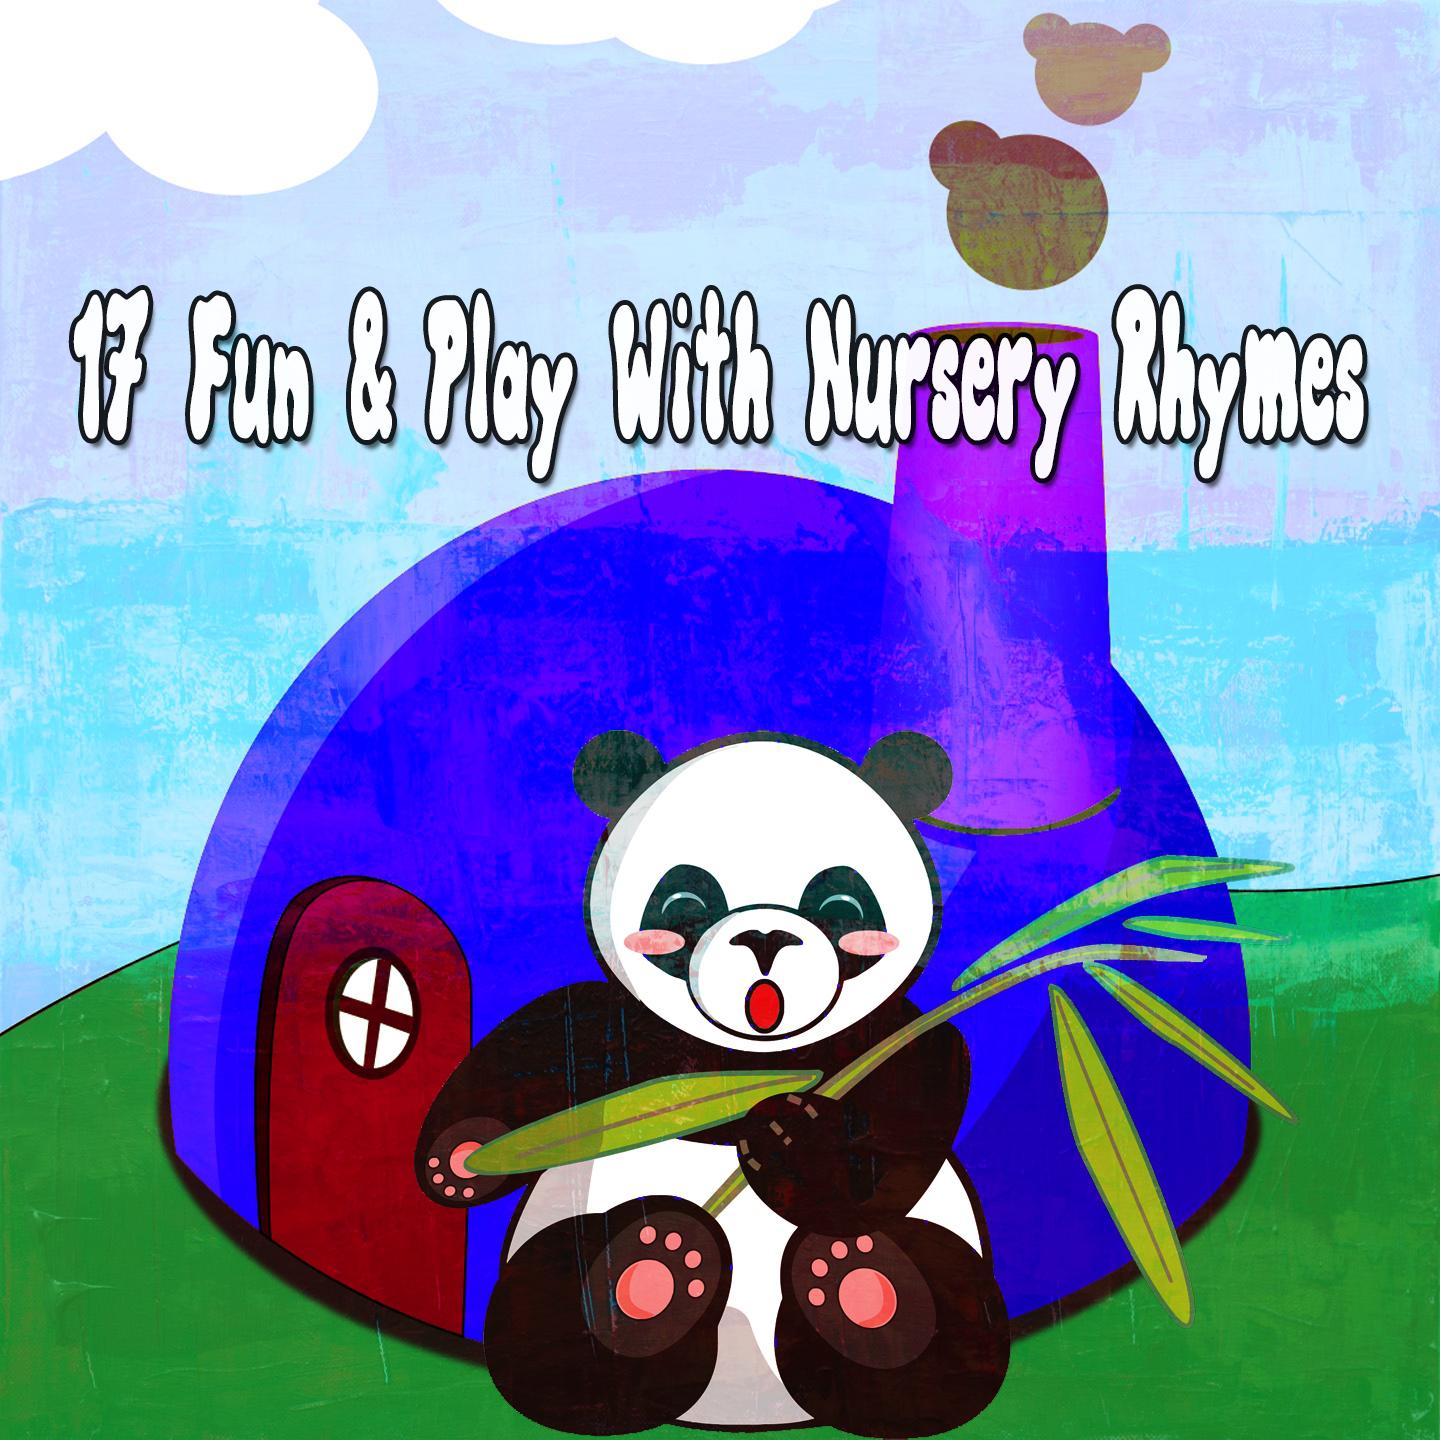 17 Fun & Play with Nursery Rhymes